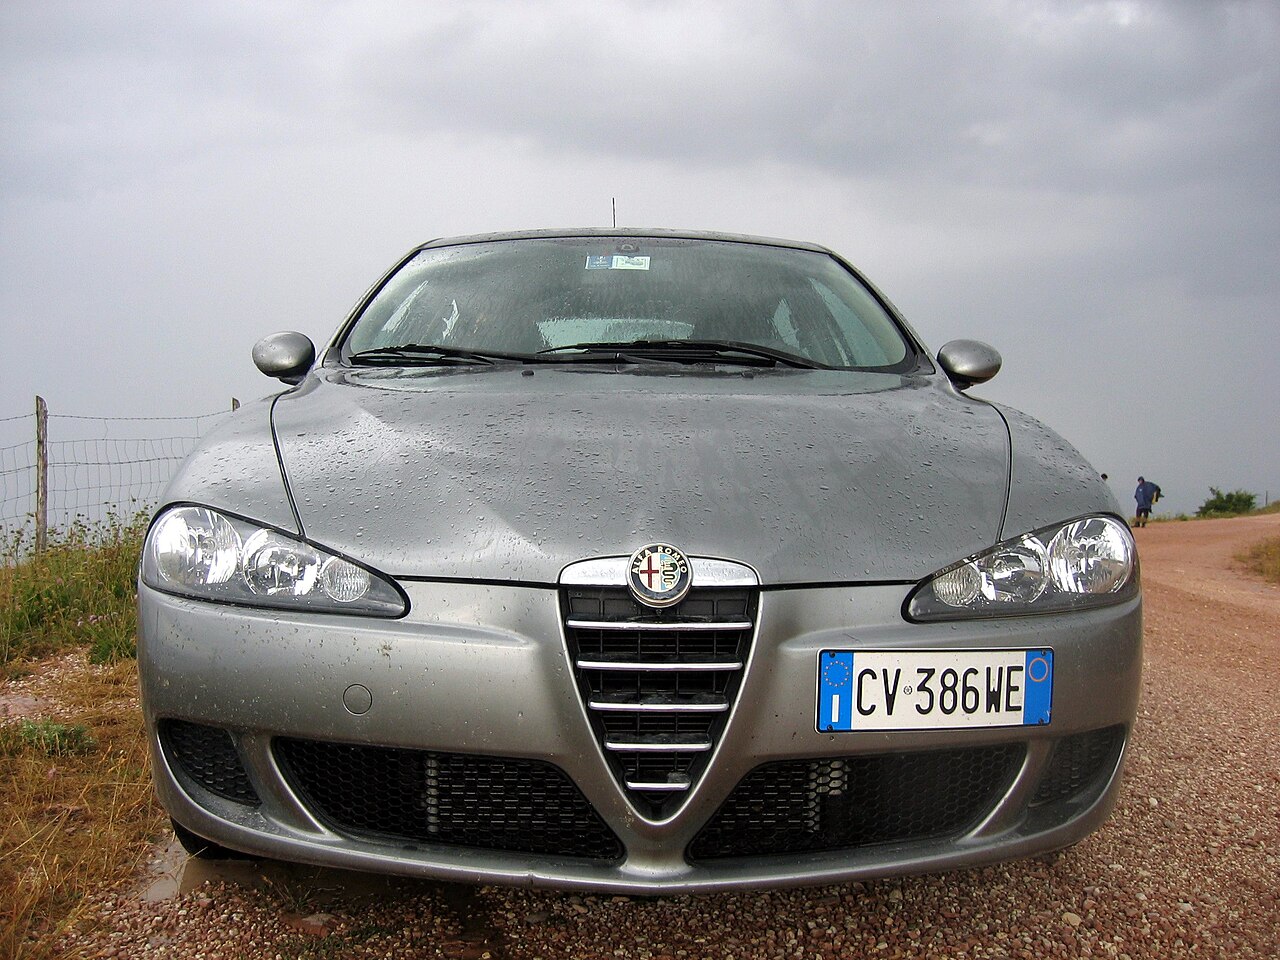 File:Alfa Romeo 147 (34577322).jpg - Wikimedia Commons